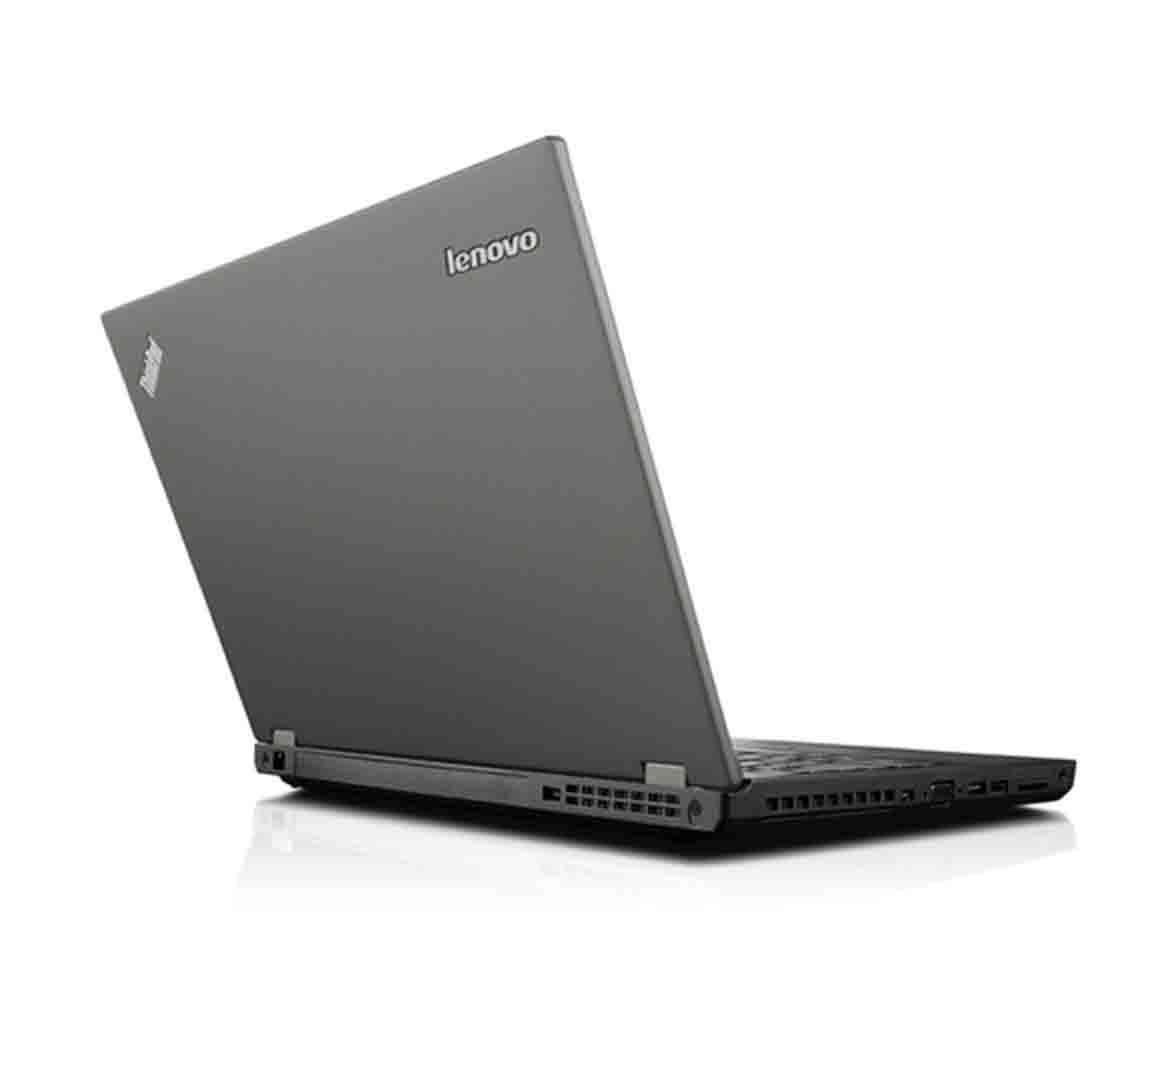 Lenovo ThinkPad W541 Business Laptop, Intel Core i5-4th Generation CPU, 16GB RAM, 512GB SSD, 15.6 inch Display, Windows 10 Pro, Refurbished Laptop